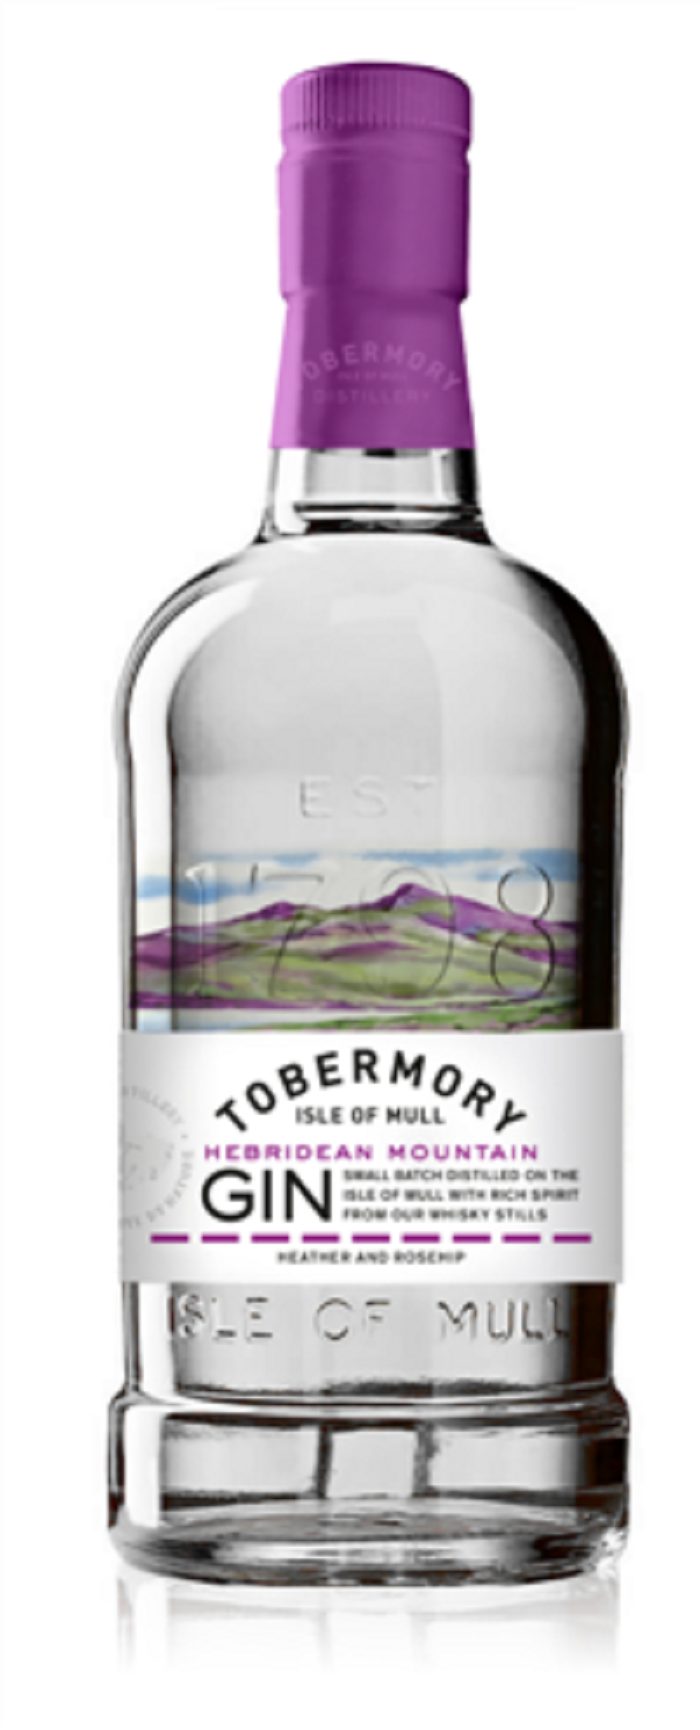 tobermory limited edition hebridean mountain gin | scotch gin